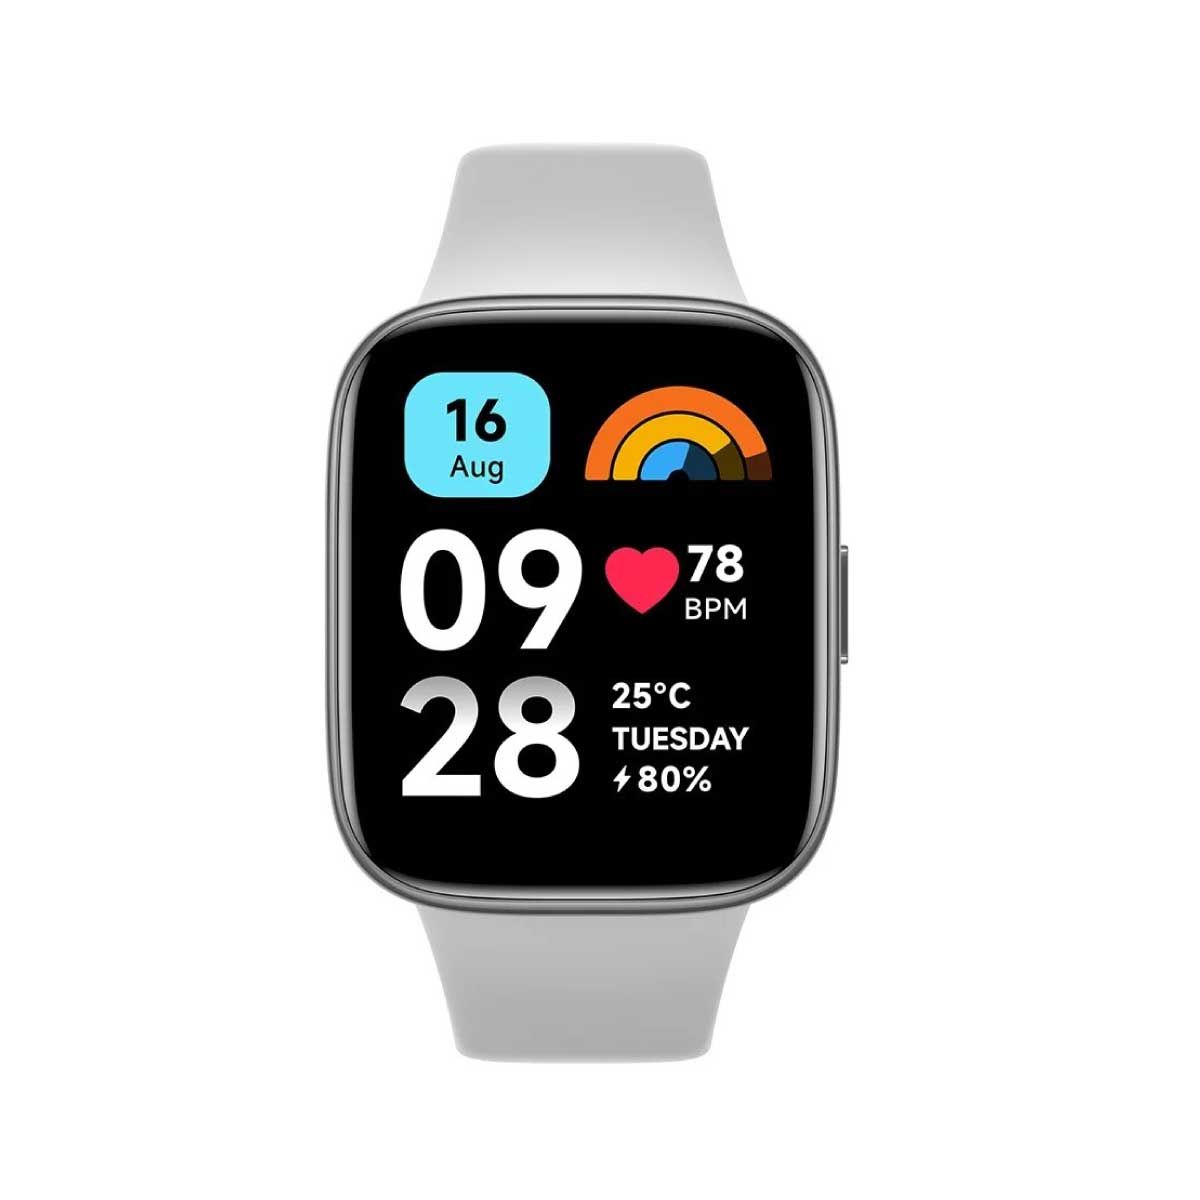 Xiaomi  Redmi Watch 3 Active (Gray)